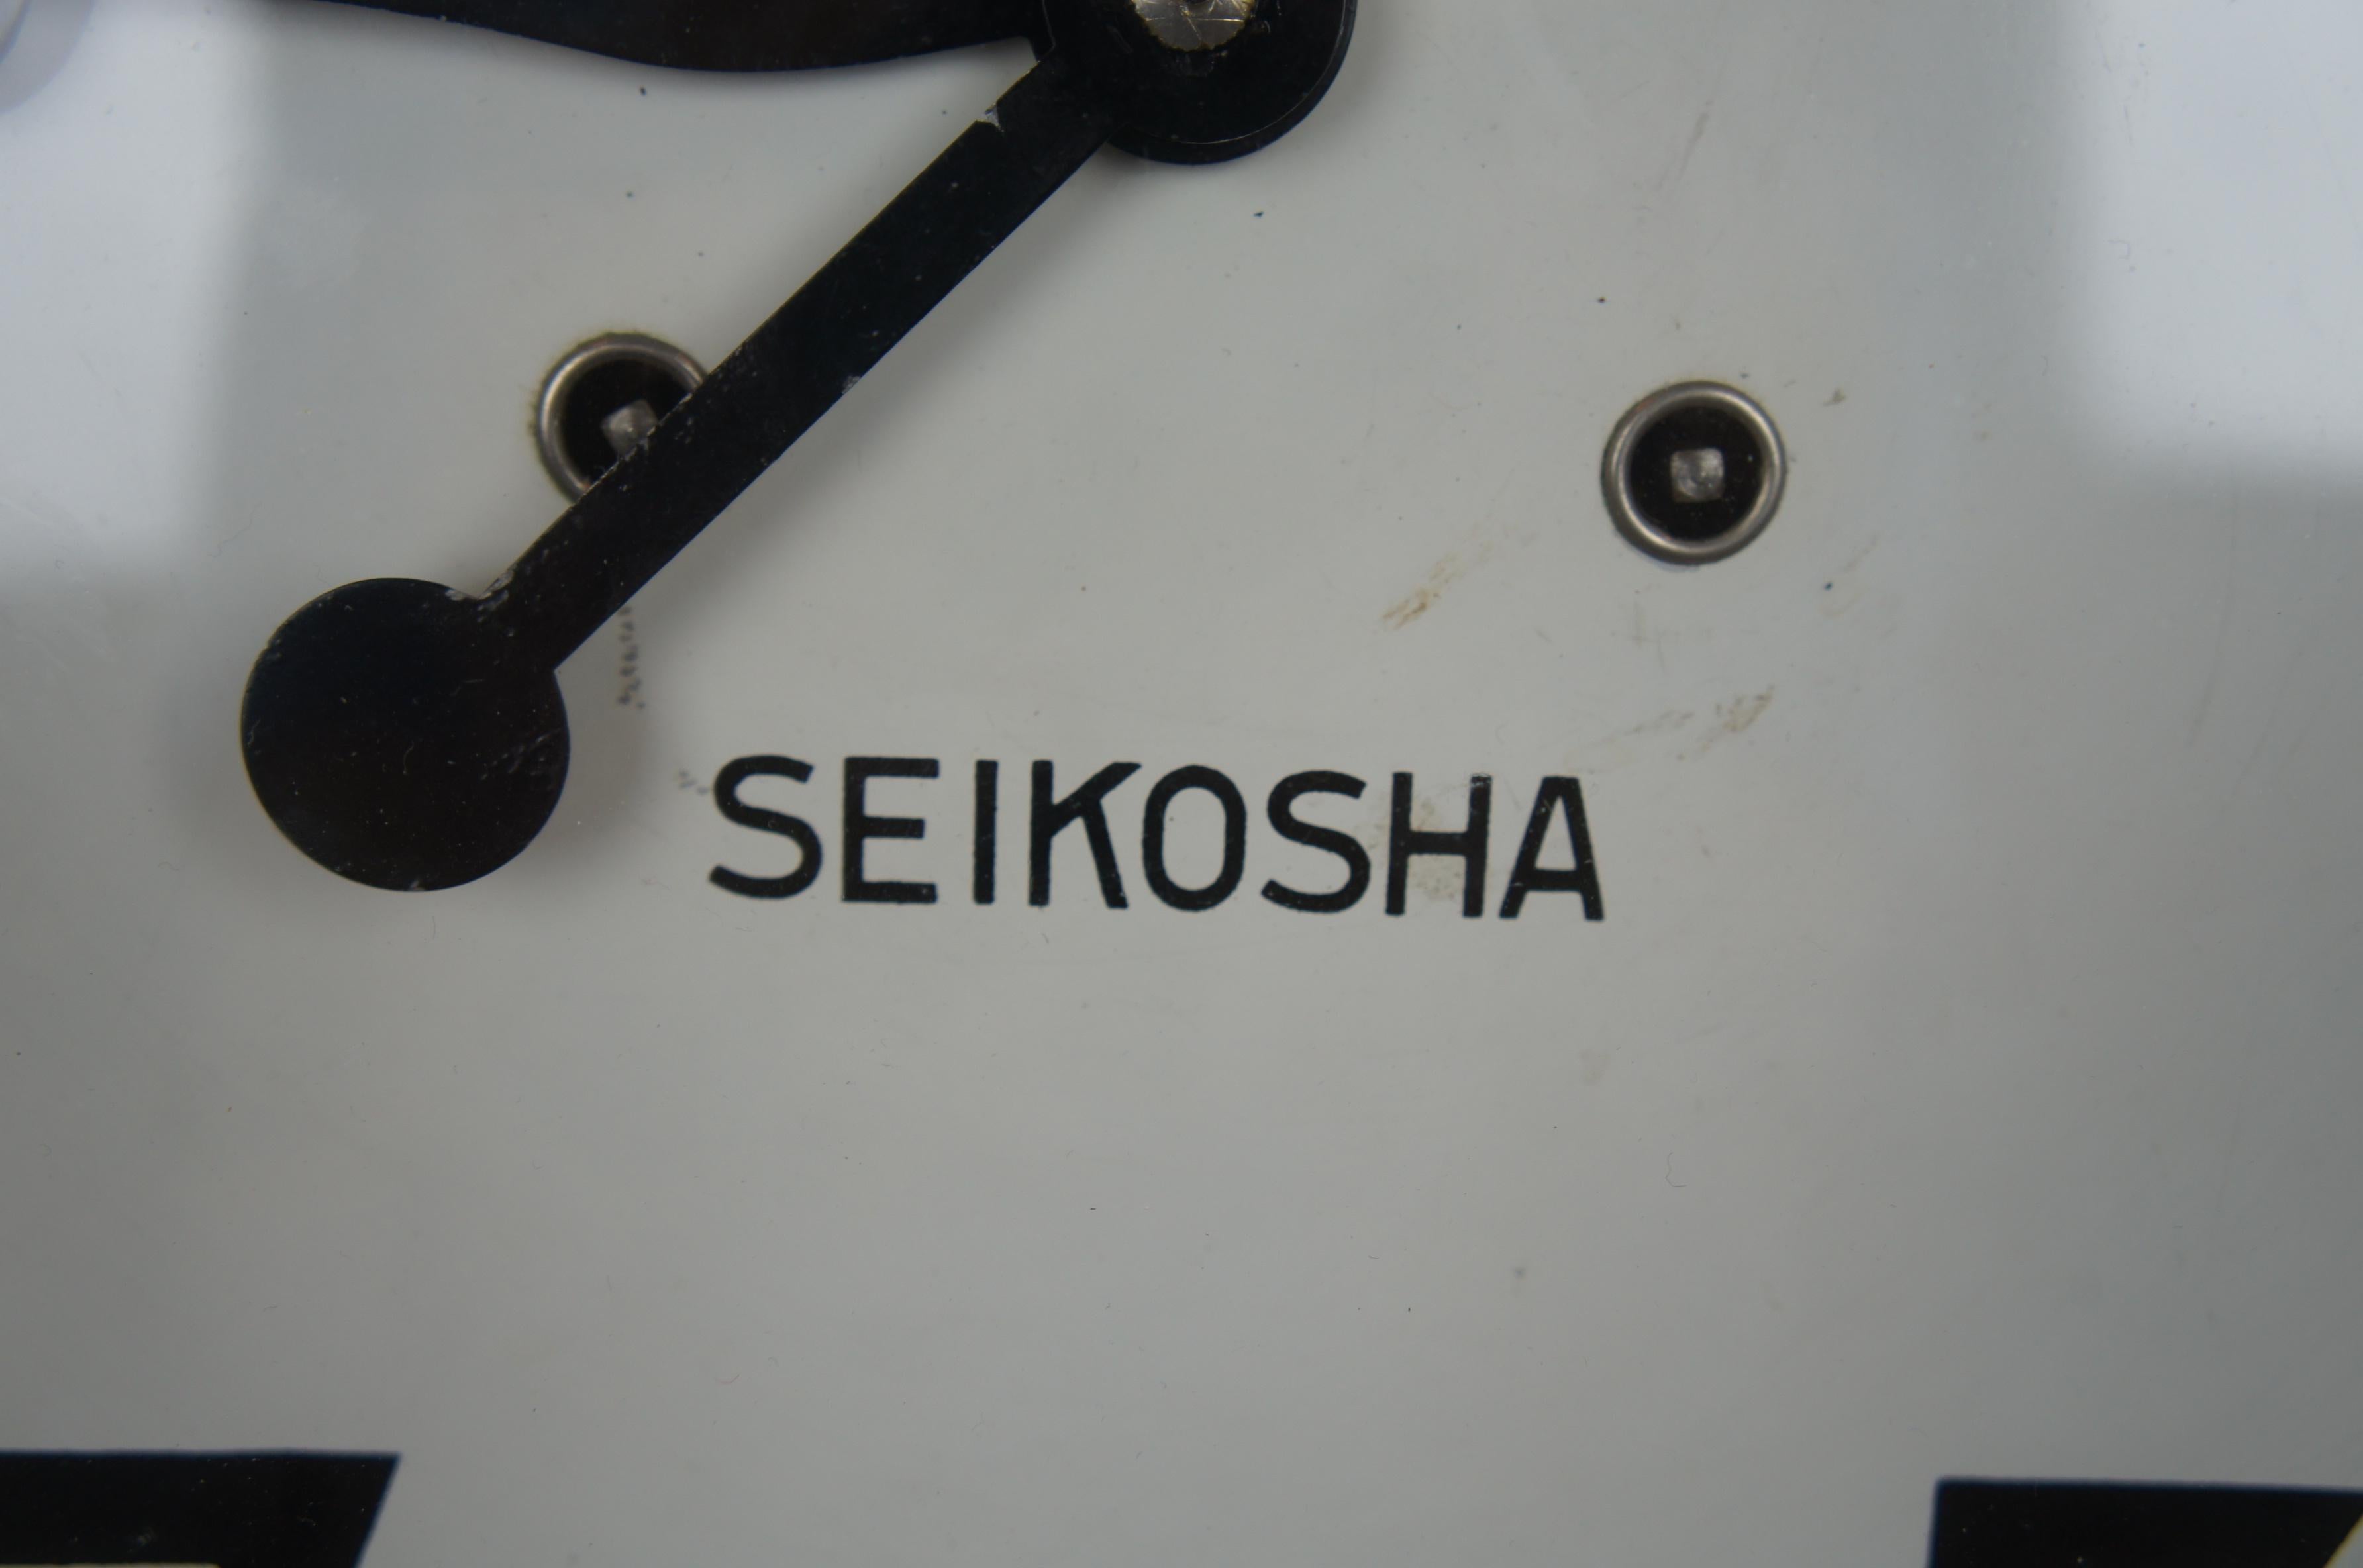 seikosha wall clock price